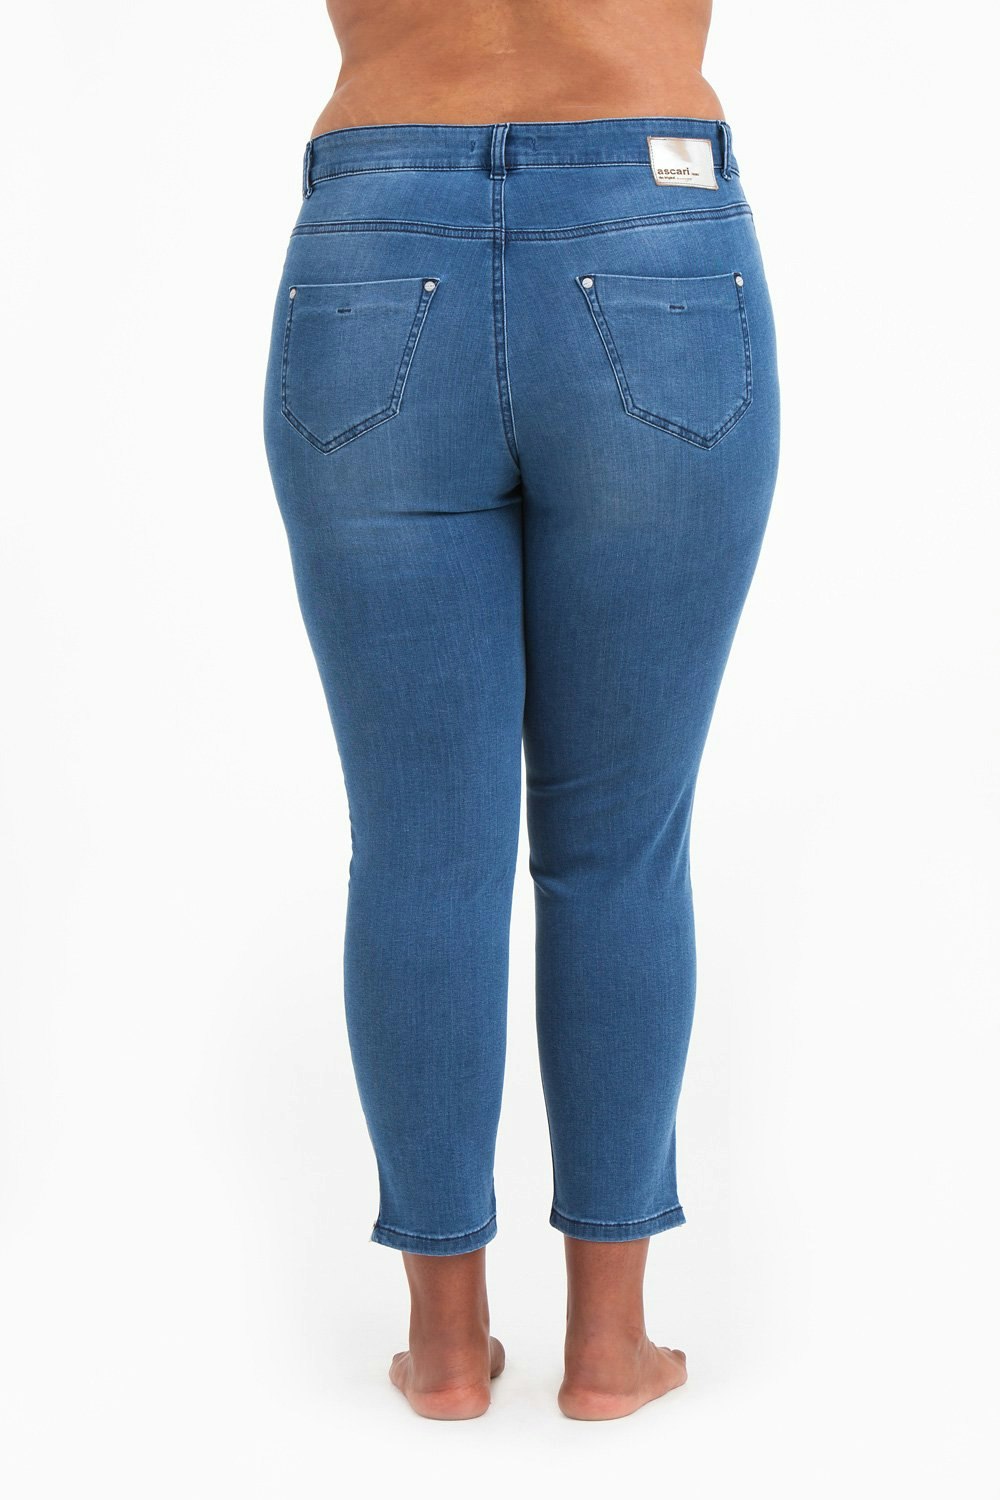 Blåa Power Zip Jeans i stora storlekar, bakifrån.